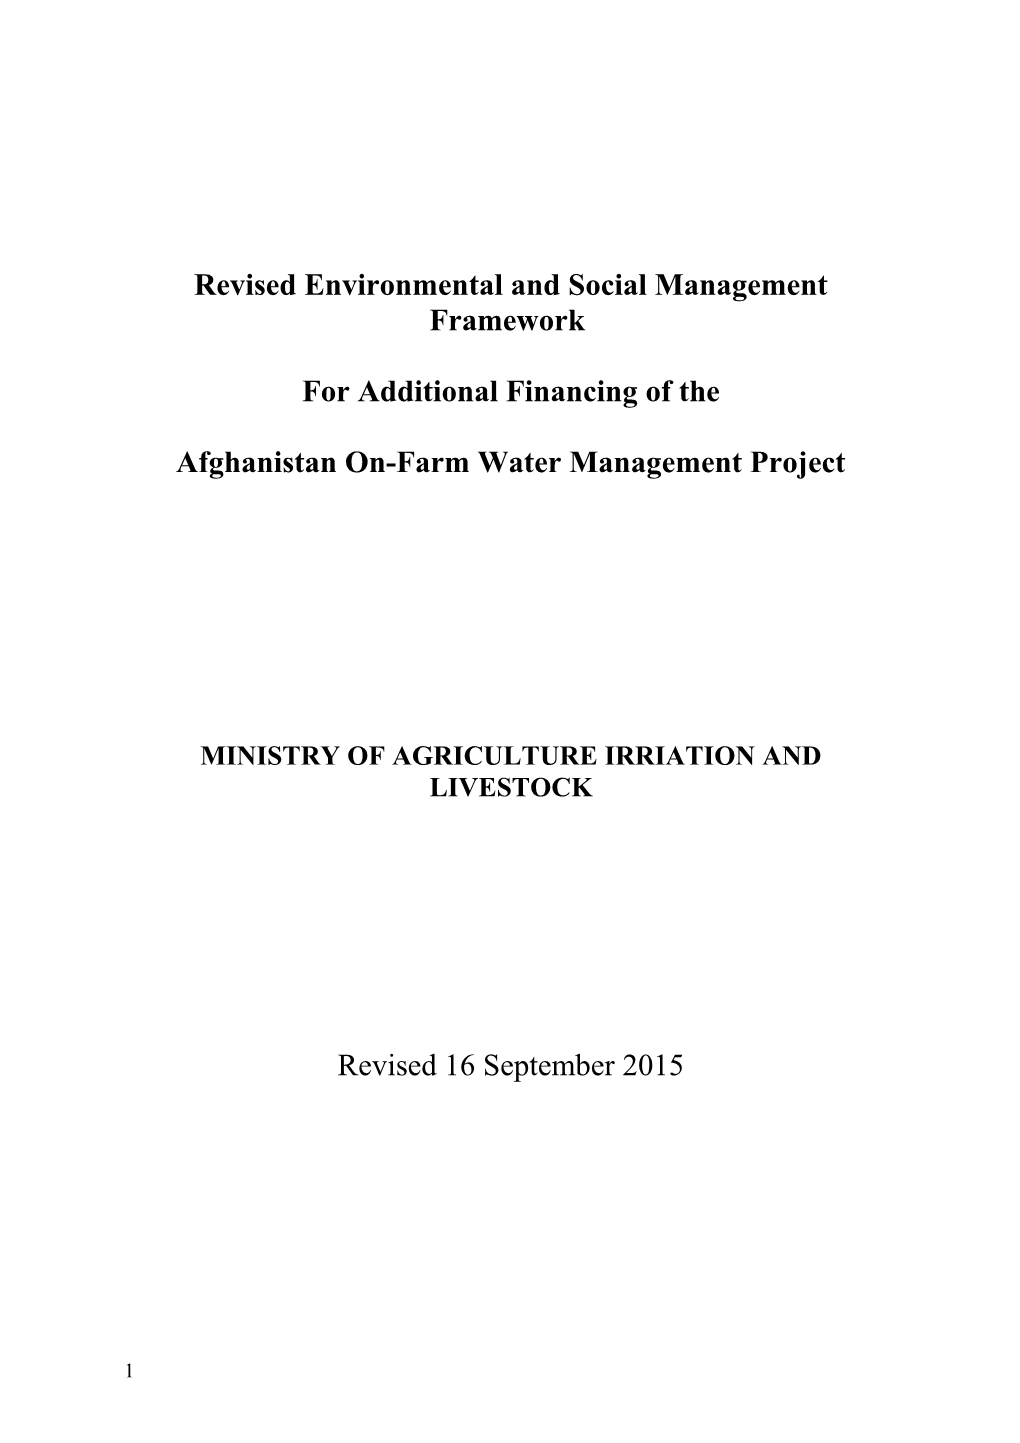 Revised Environmental and Social Management Framework